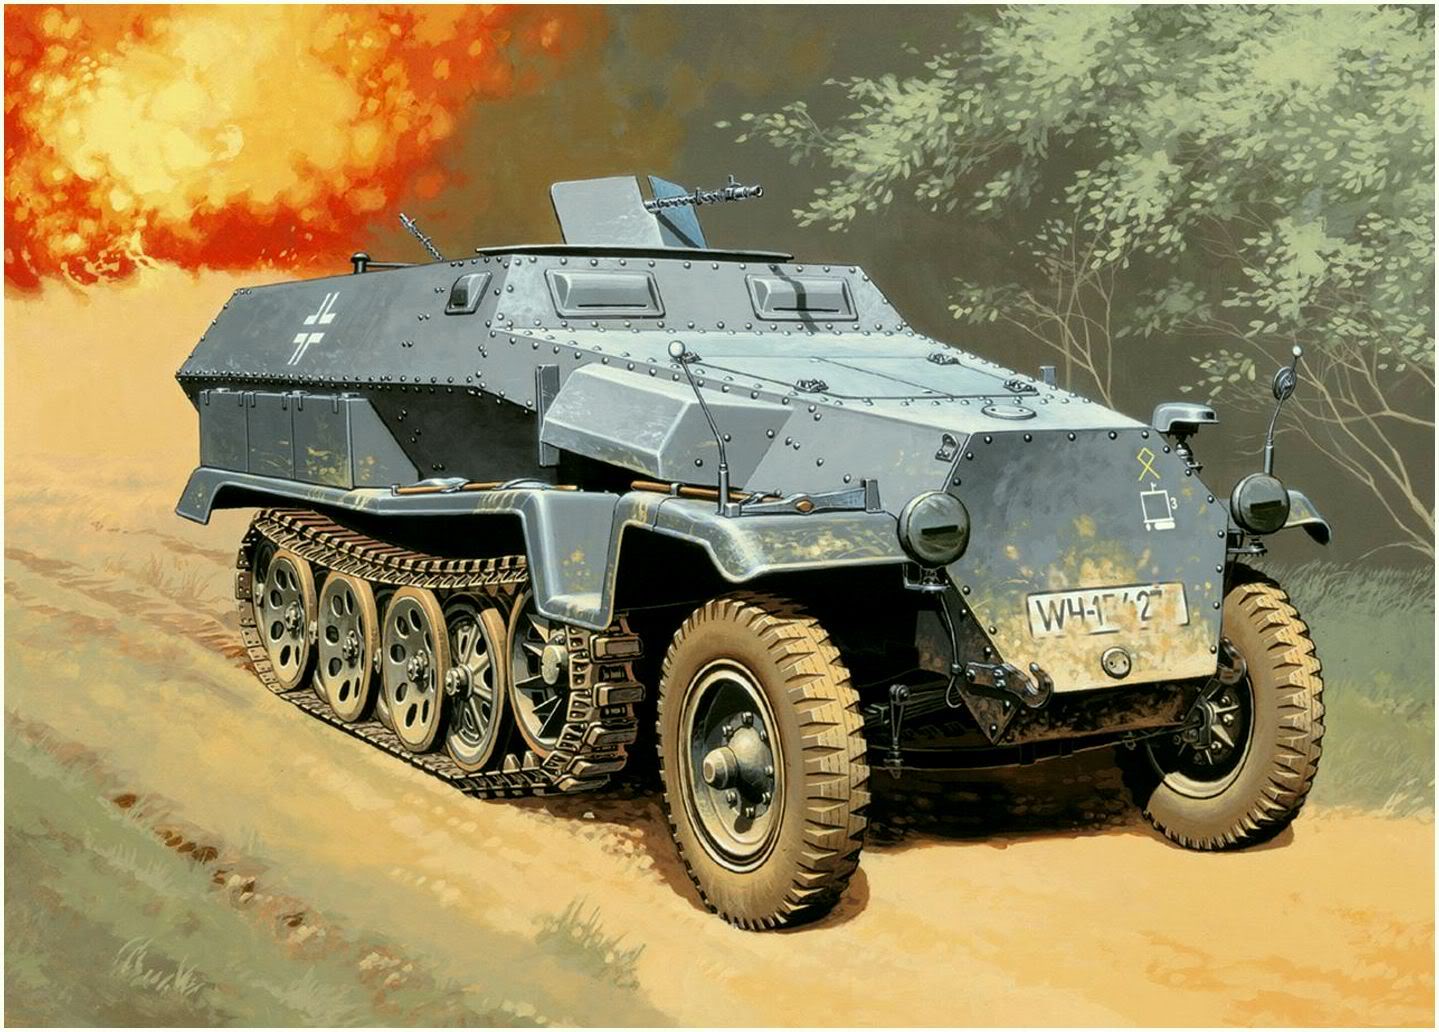 Wróbel Arkadiusz. Полугусеничный бронетранспортер Sd.Kfz. 251.